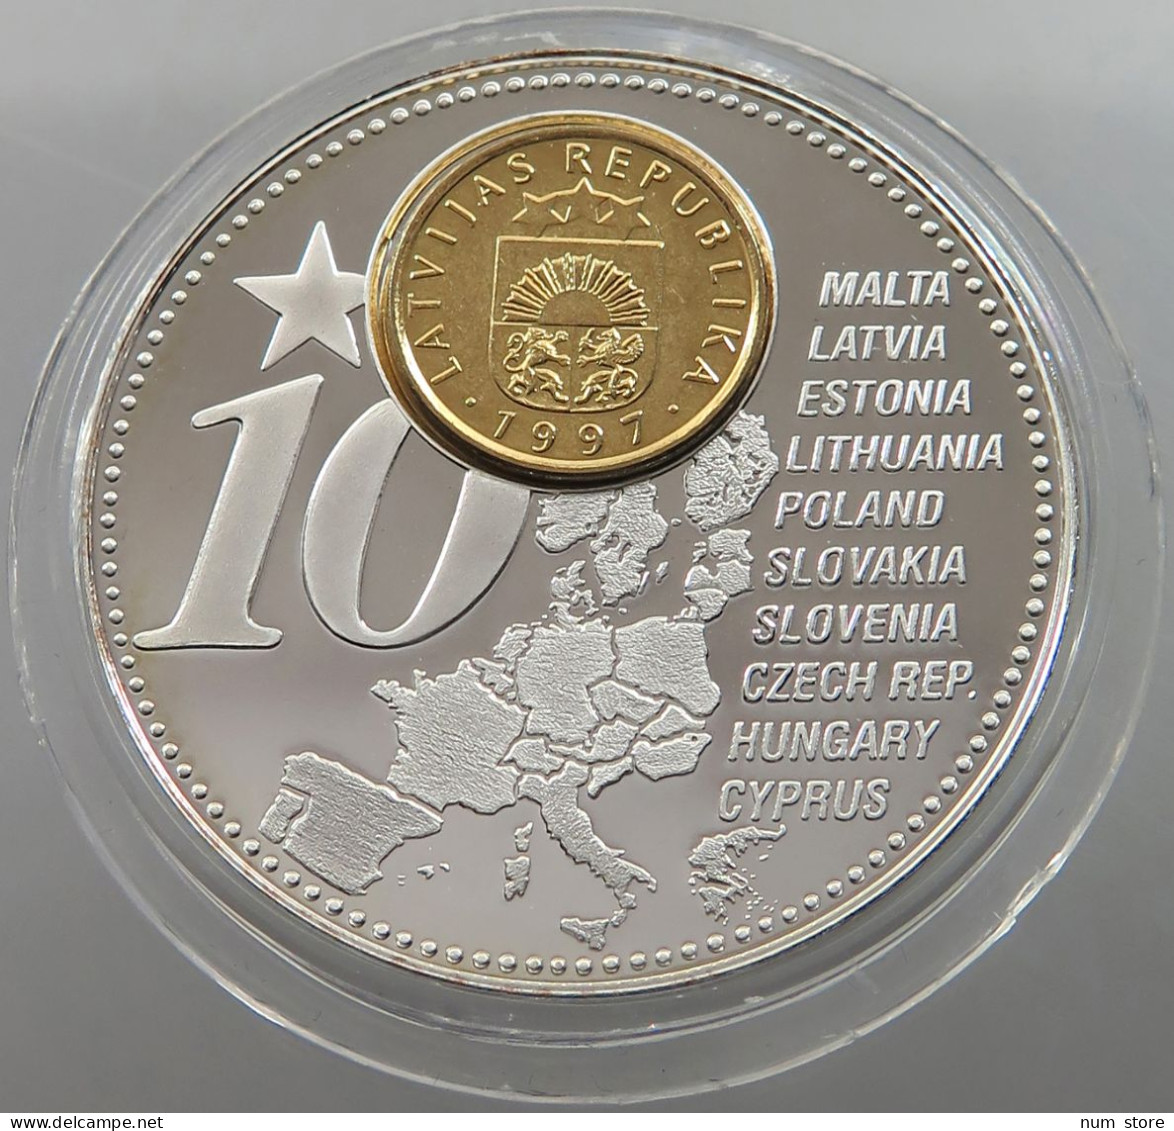 LATVIA MEDAL 2006 THE FORTHCOMING NEW EURO COUNTRIES #sm06 0215 - Latvia